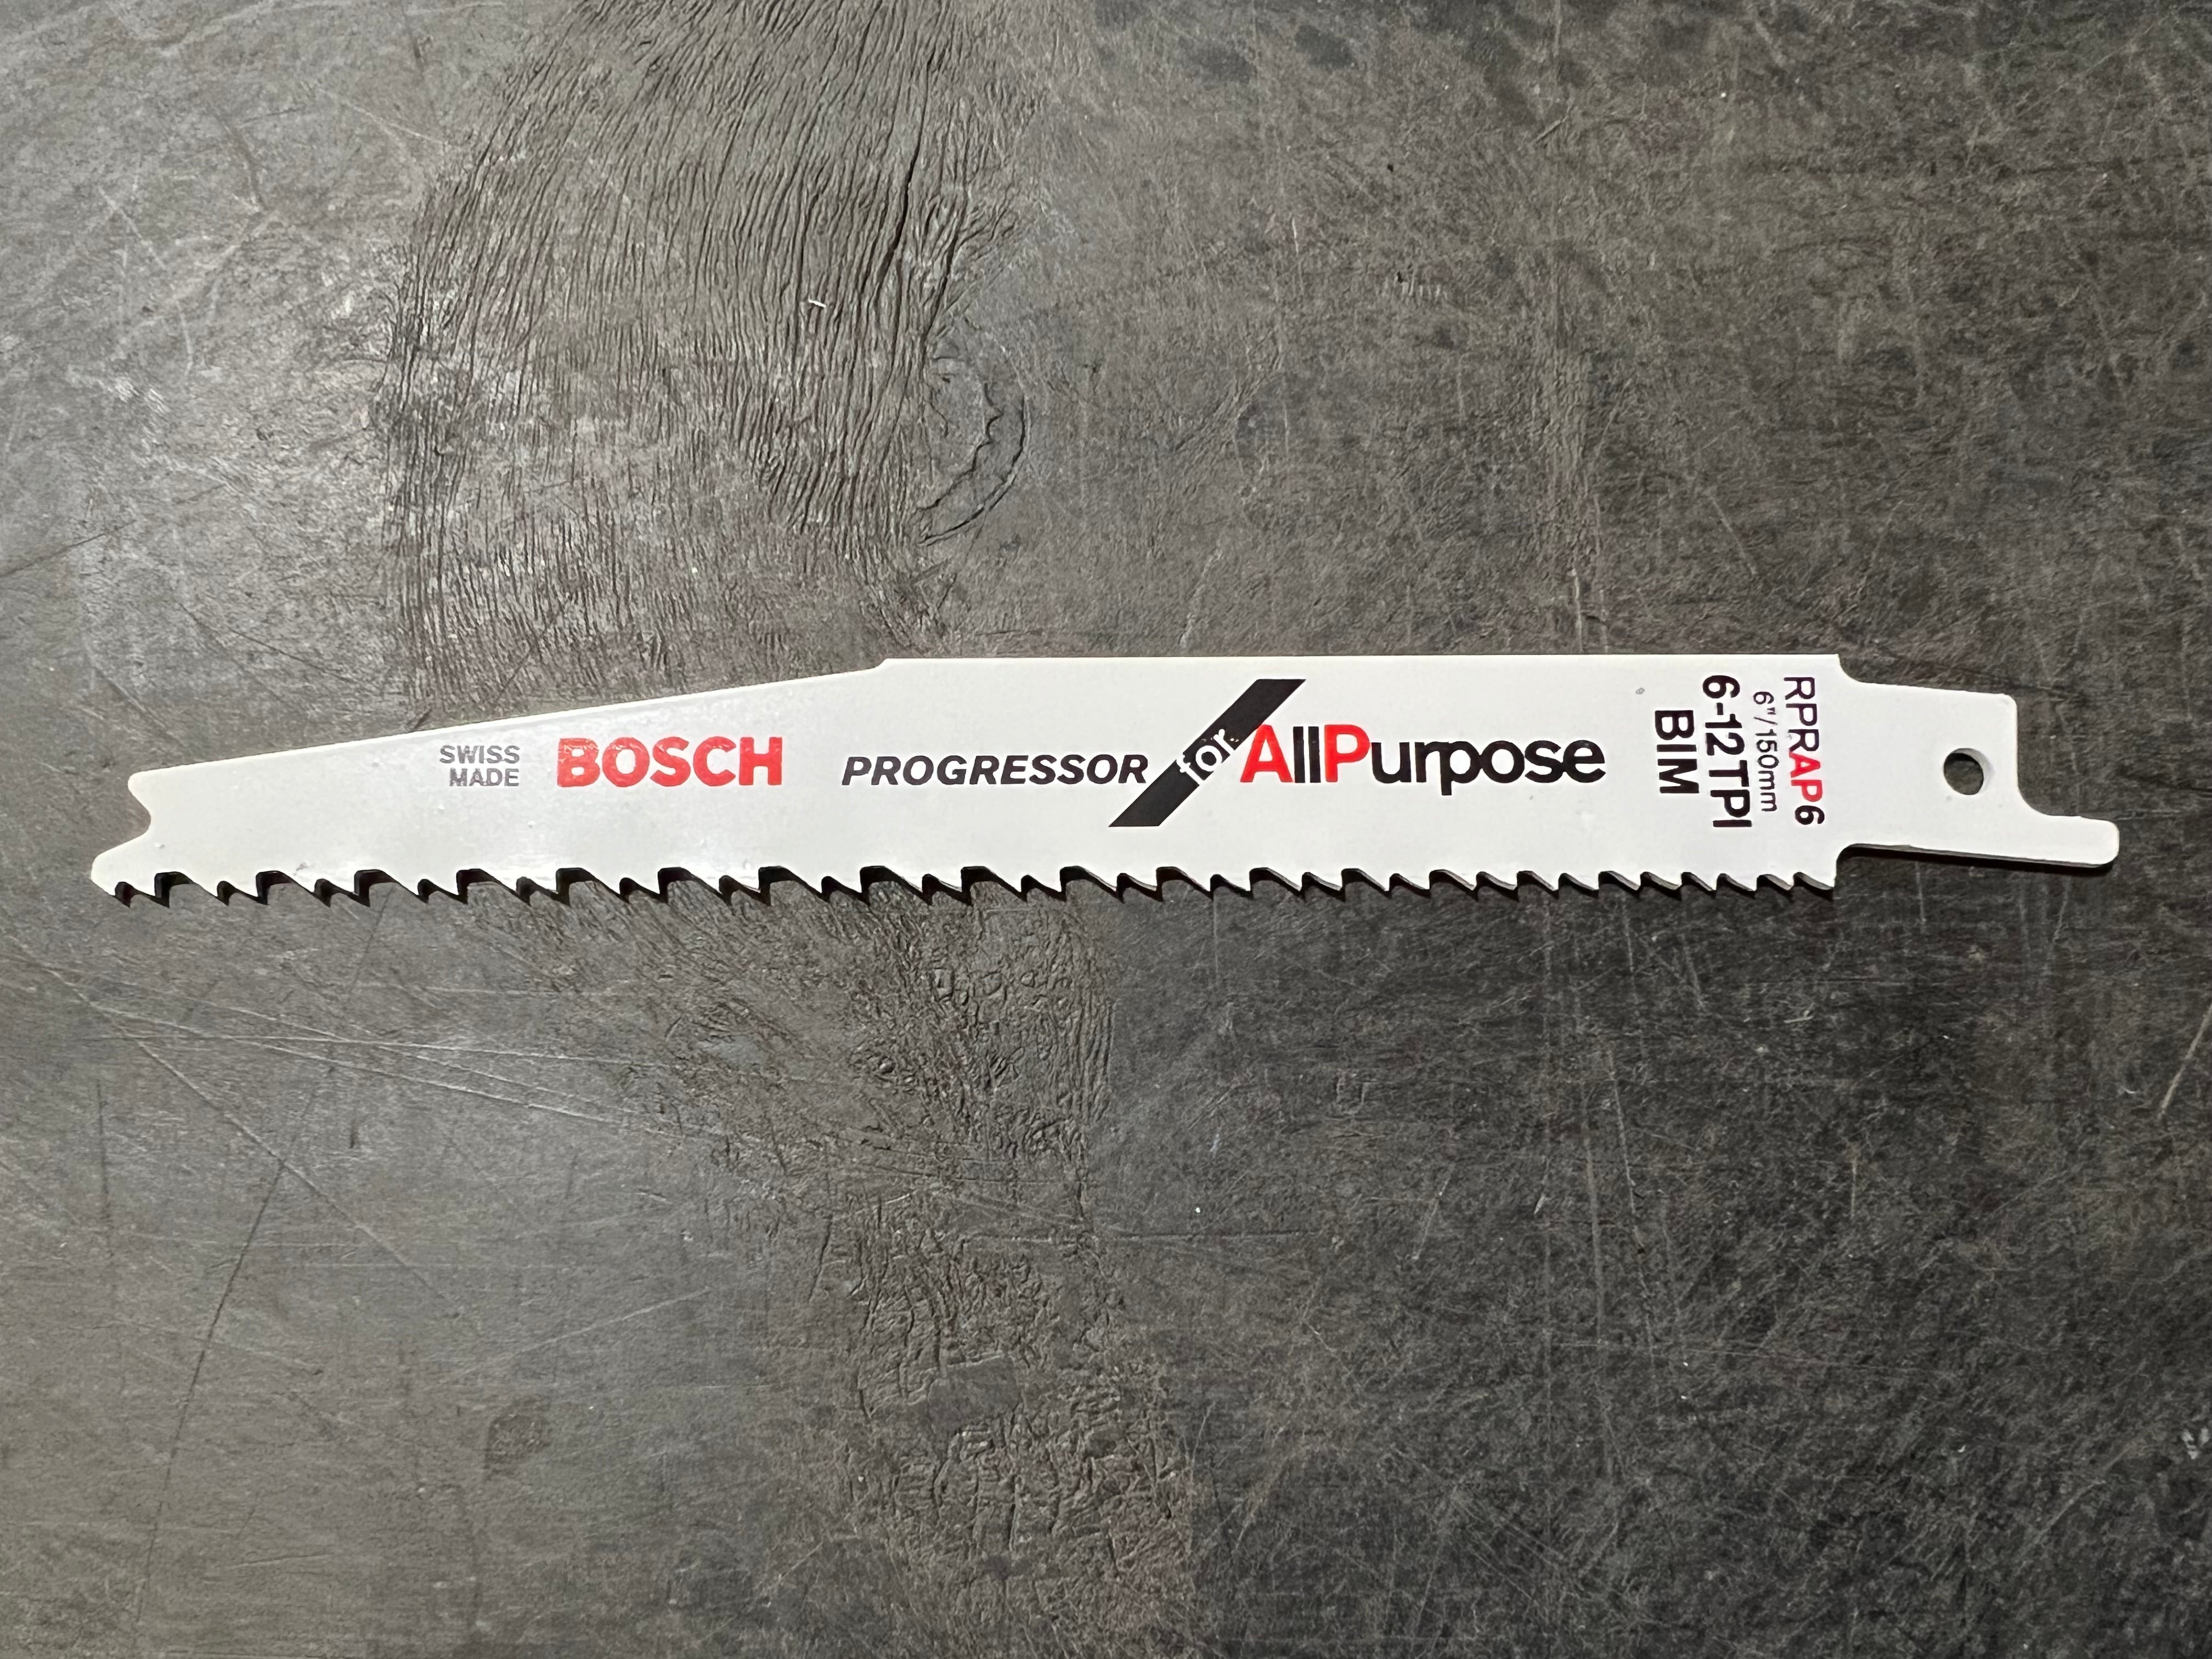 Bosch RPRAP6-25B 6" Progressive Saw Blades 25pk. Swiss